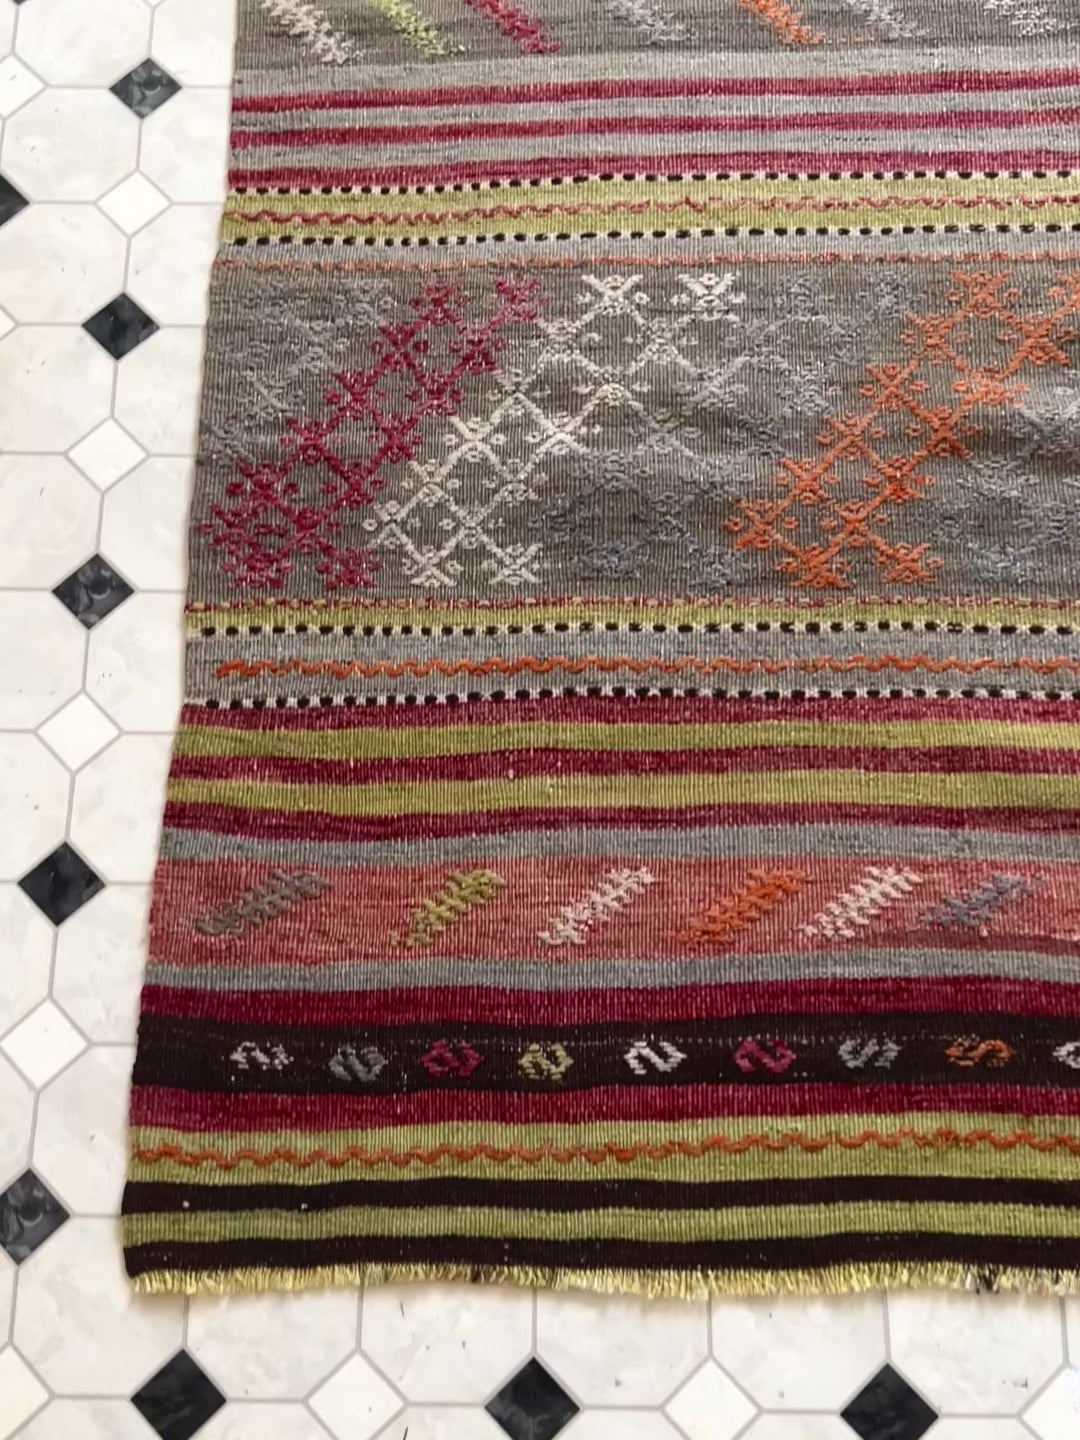 Balikesir Turkish kilim rug. Vintage anatolian rug shop berkeley los altos. Oriental rug store los gatos palo alro. San francisco bay area rug store. Buy rugs online free shipping to USA, Canada, Toronto, California.